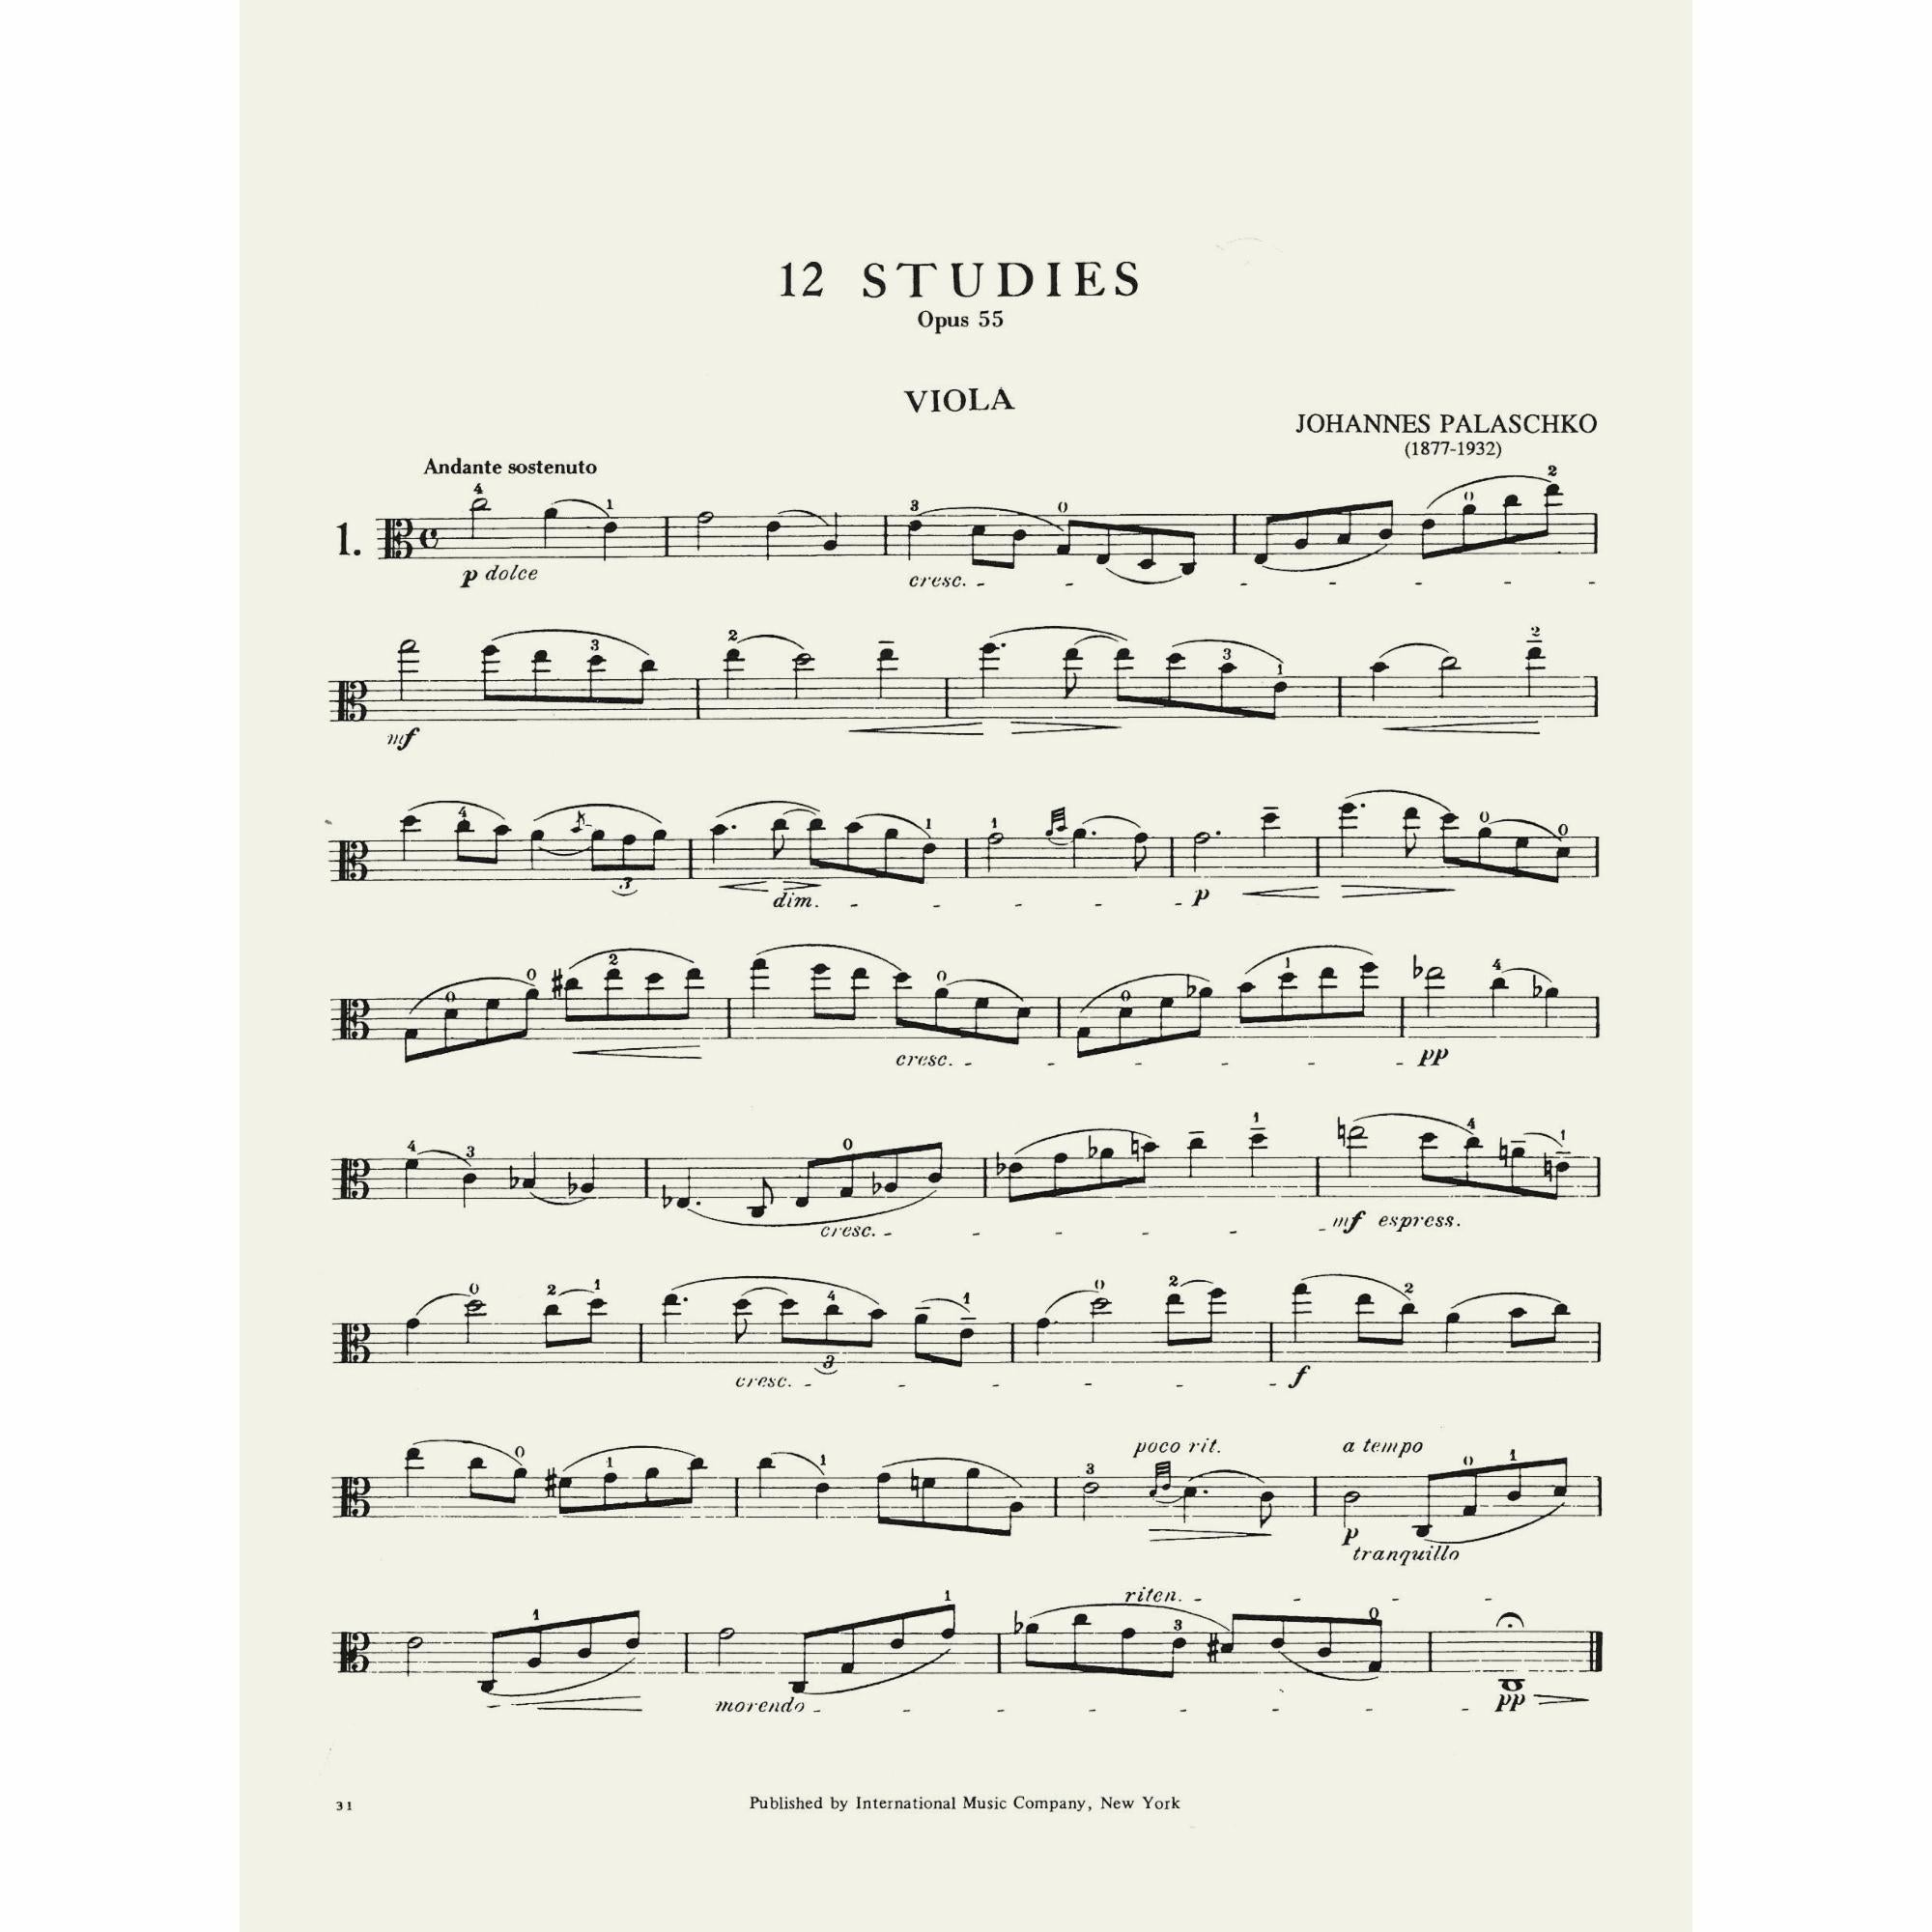 Palaschko: 12 Studies for Viola, Op. 55